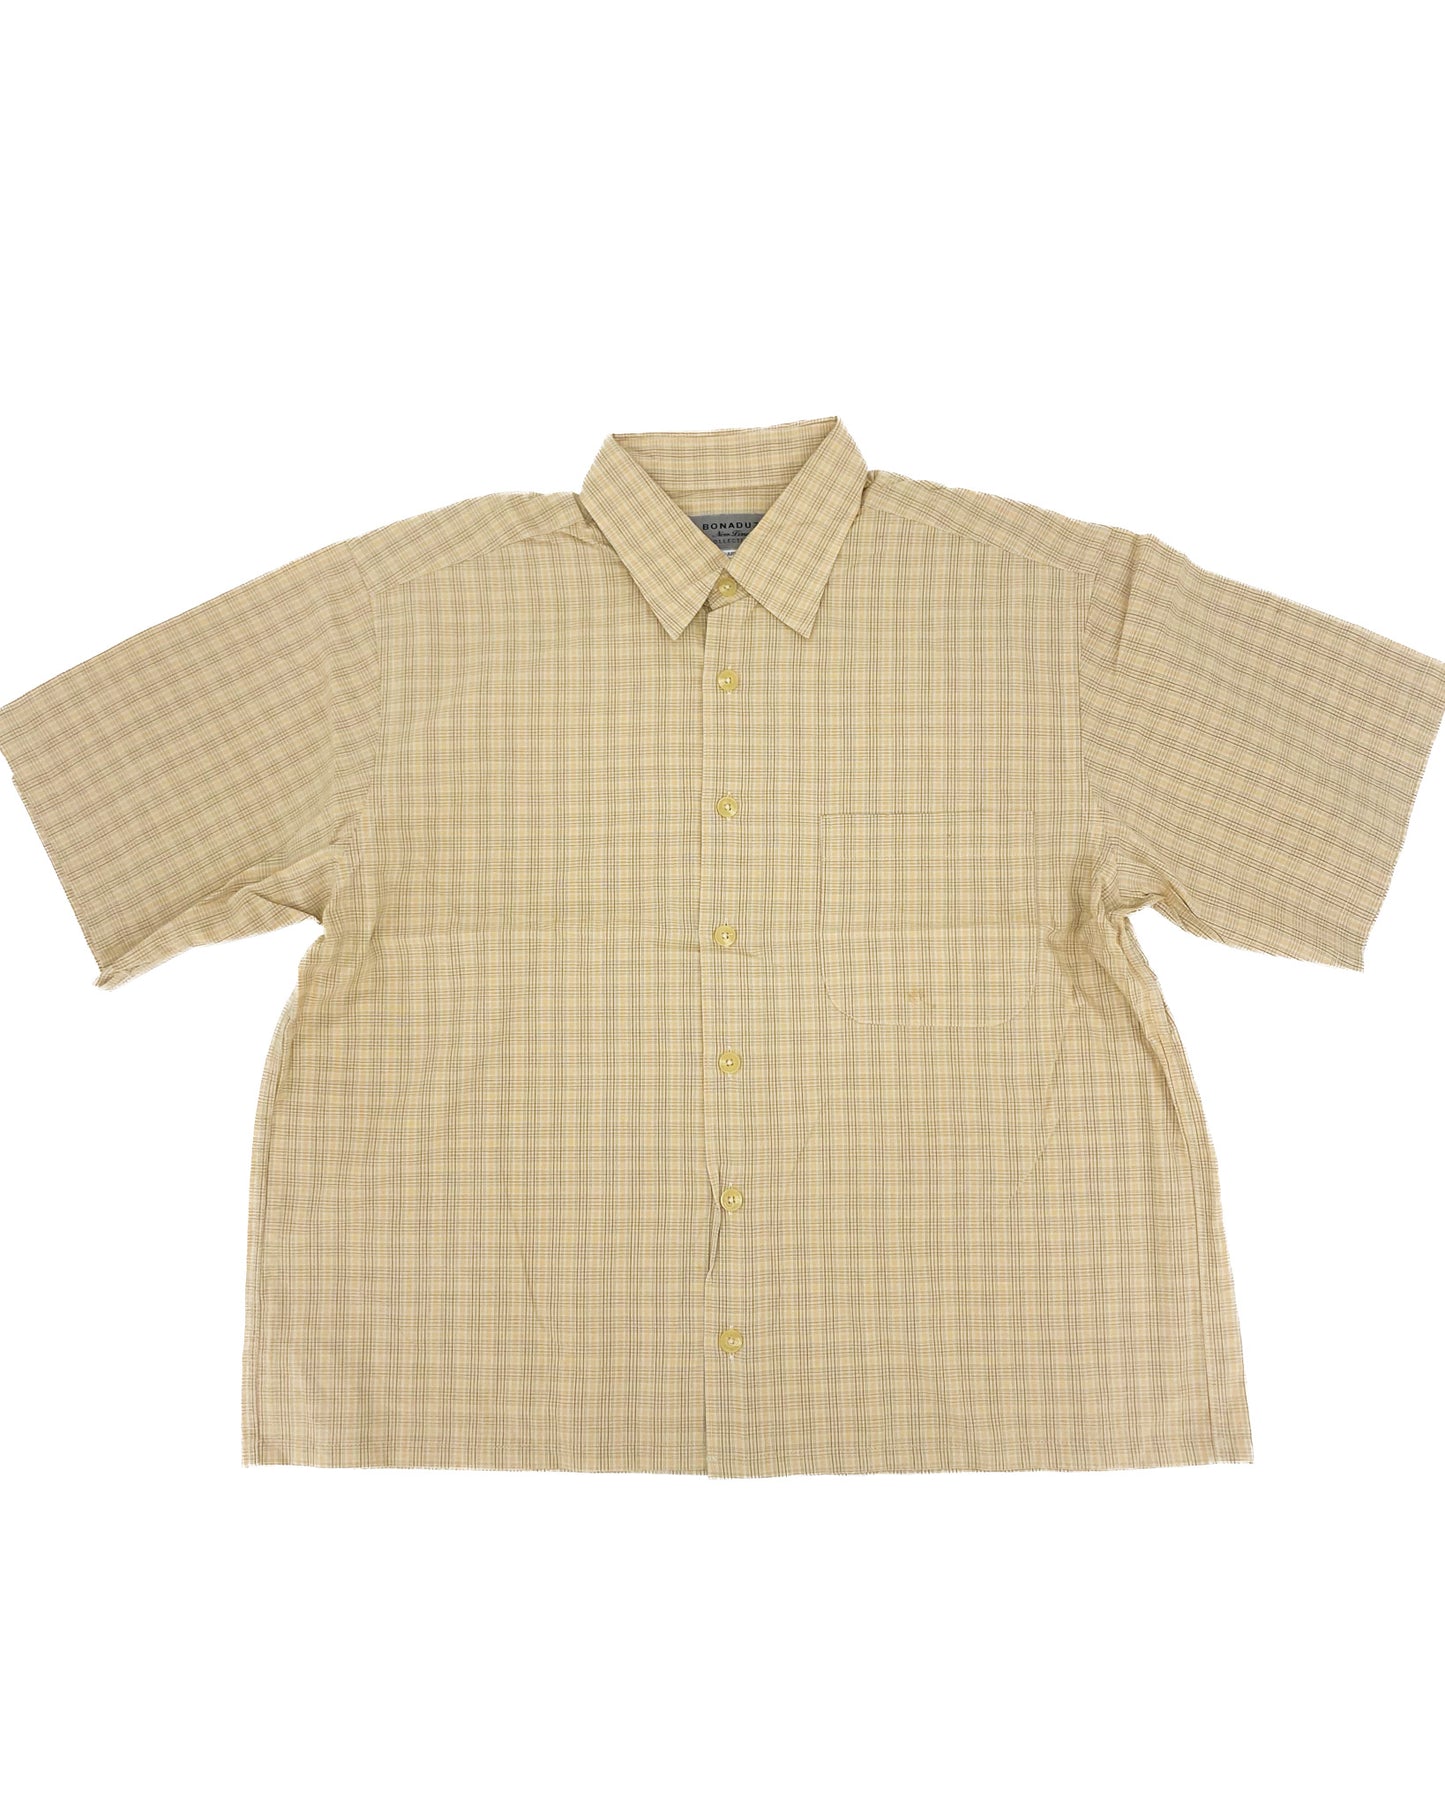 Vintage Brown/Orange Checkered Shirt - L